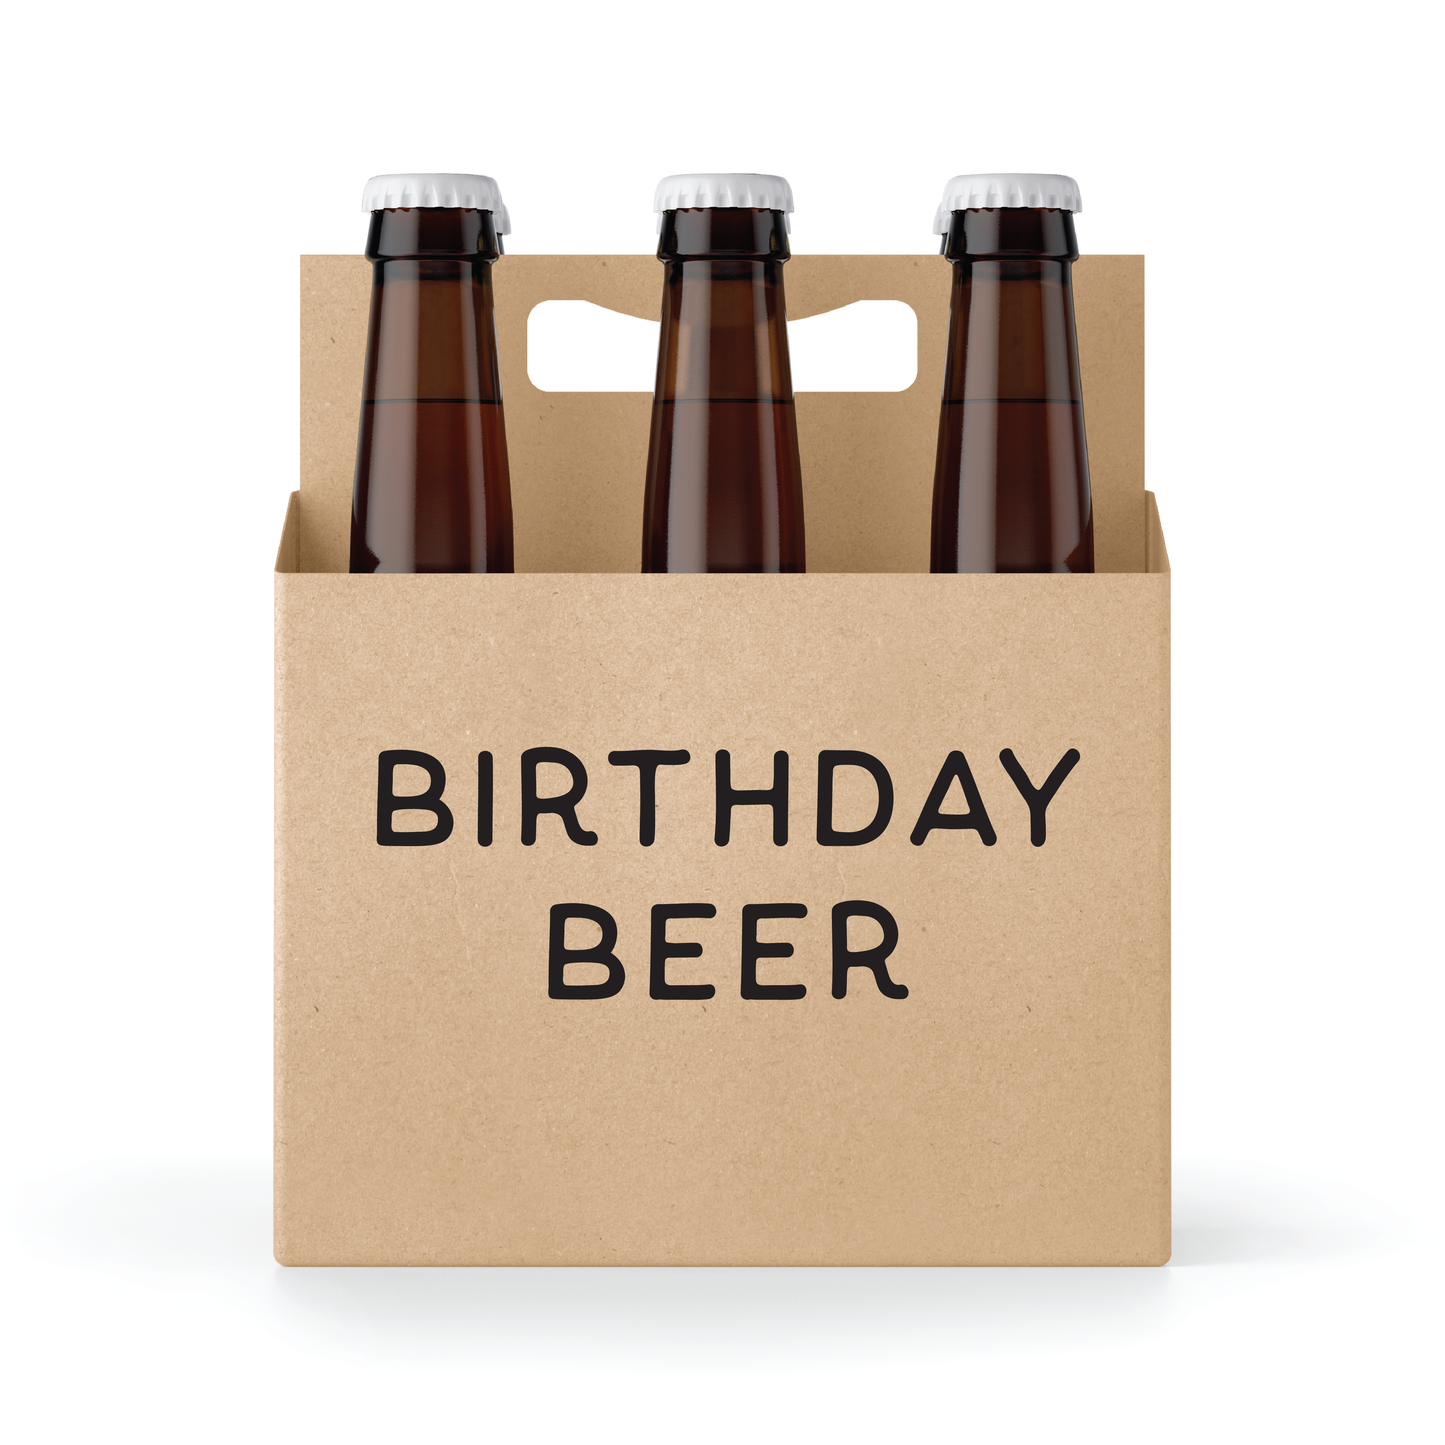 Birthday Beer 6-pack Holder